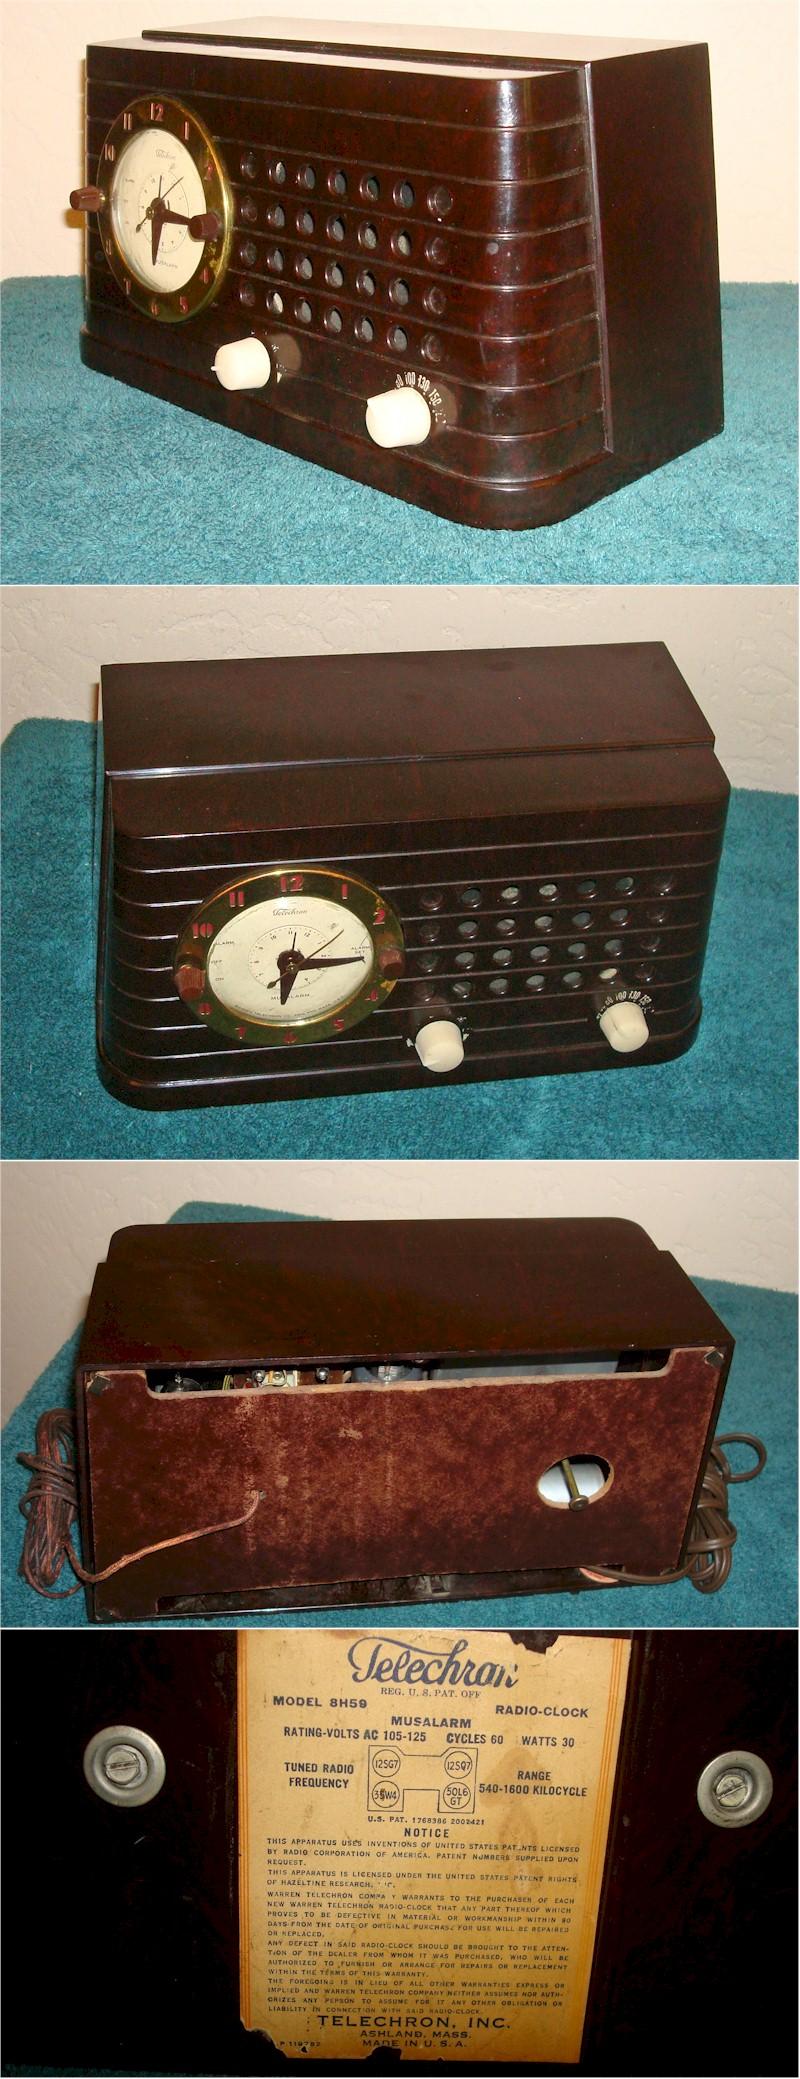 Telechron 8H59 "Musalarm" Clock Radio (1950)